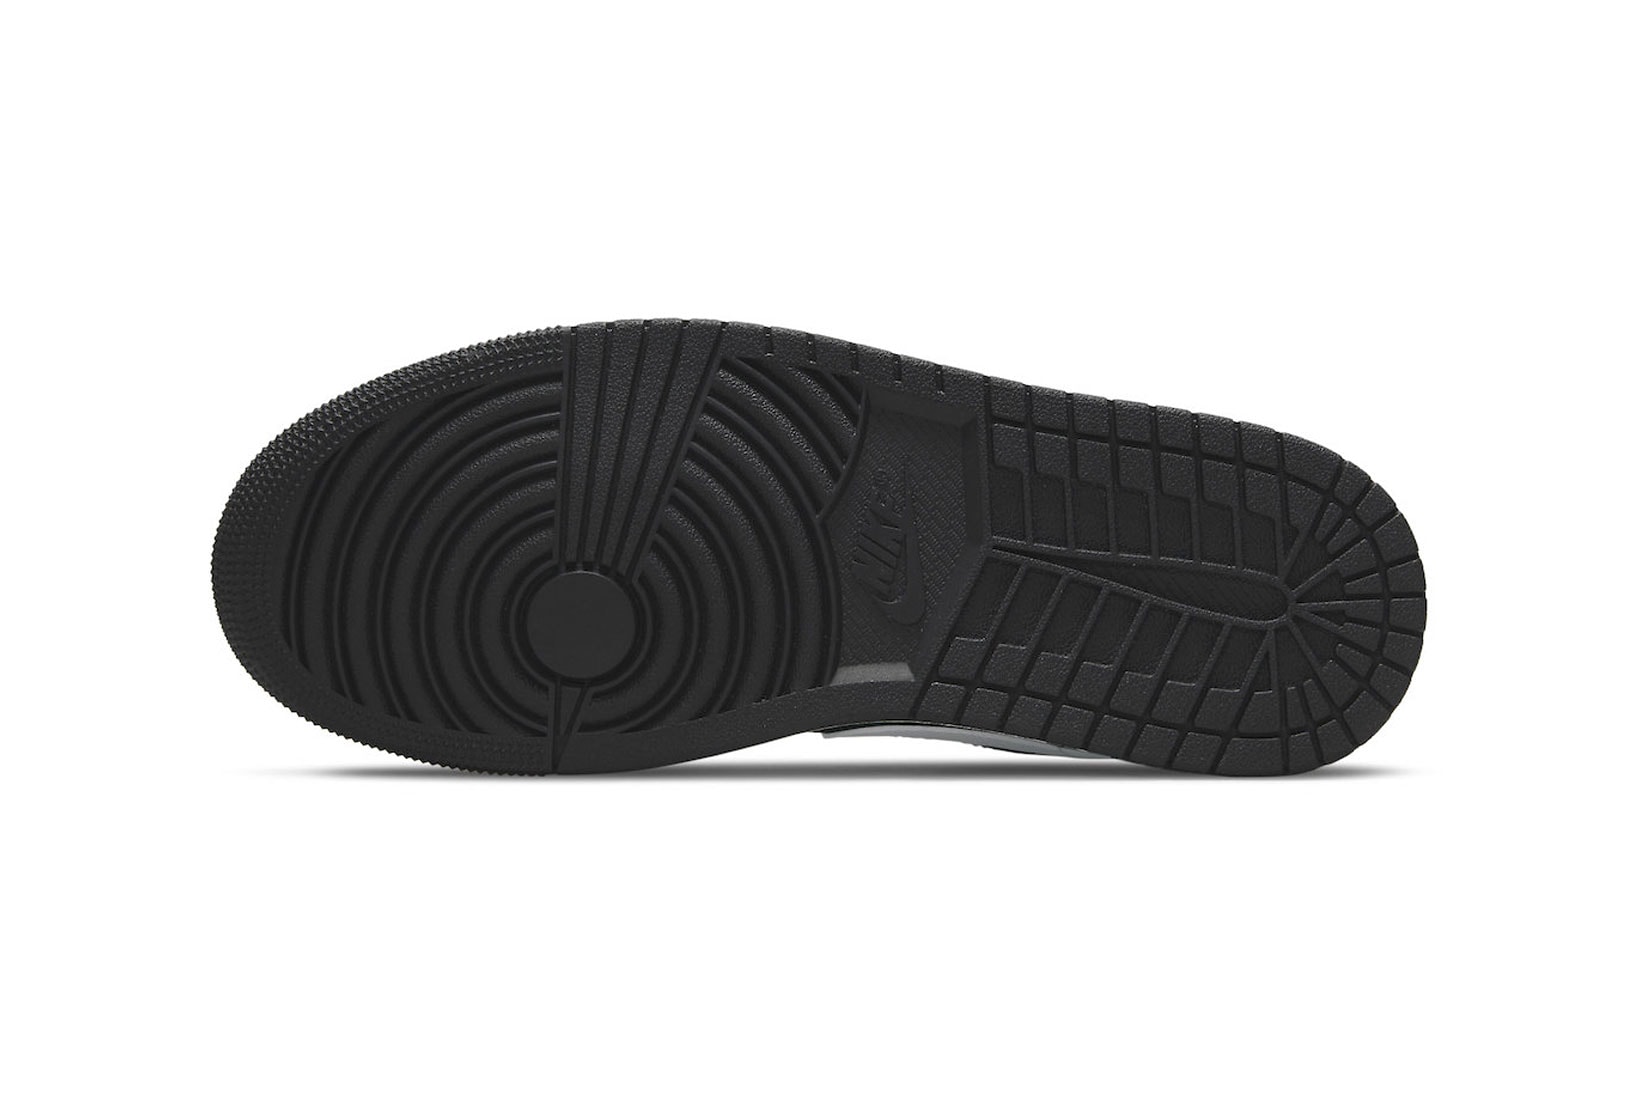 Nike Air Jordan 1 Low "Homage" Split Black White Official Images Release Info